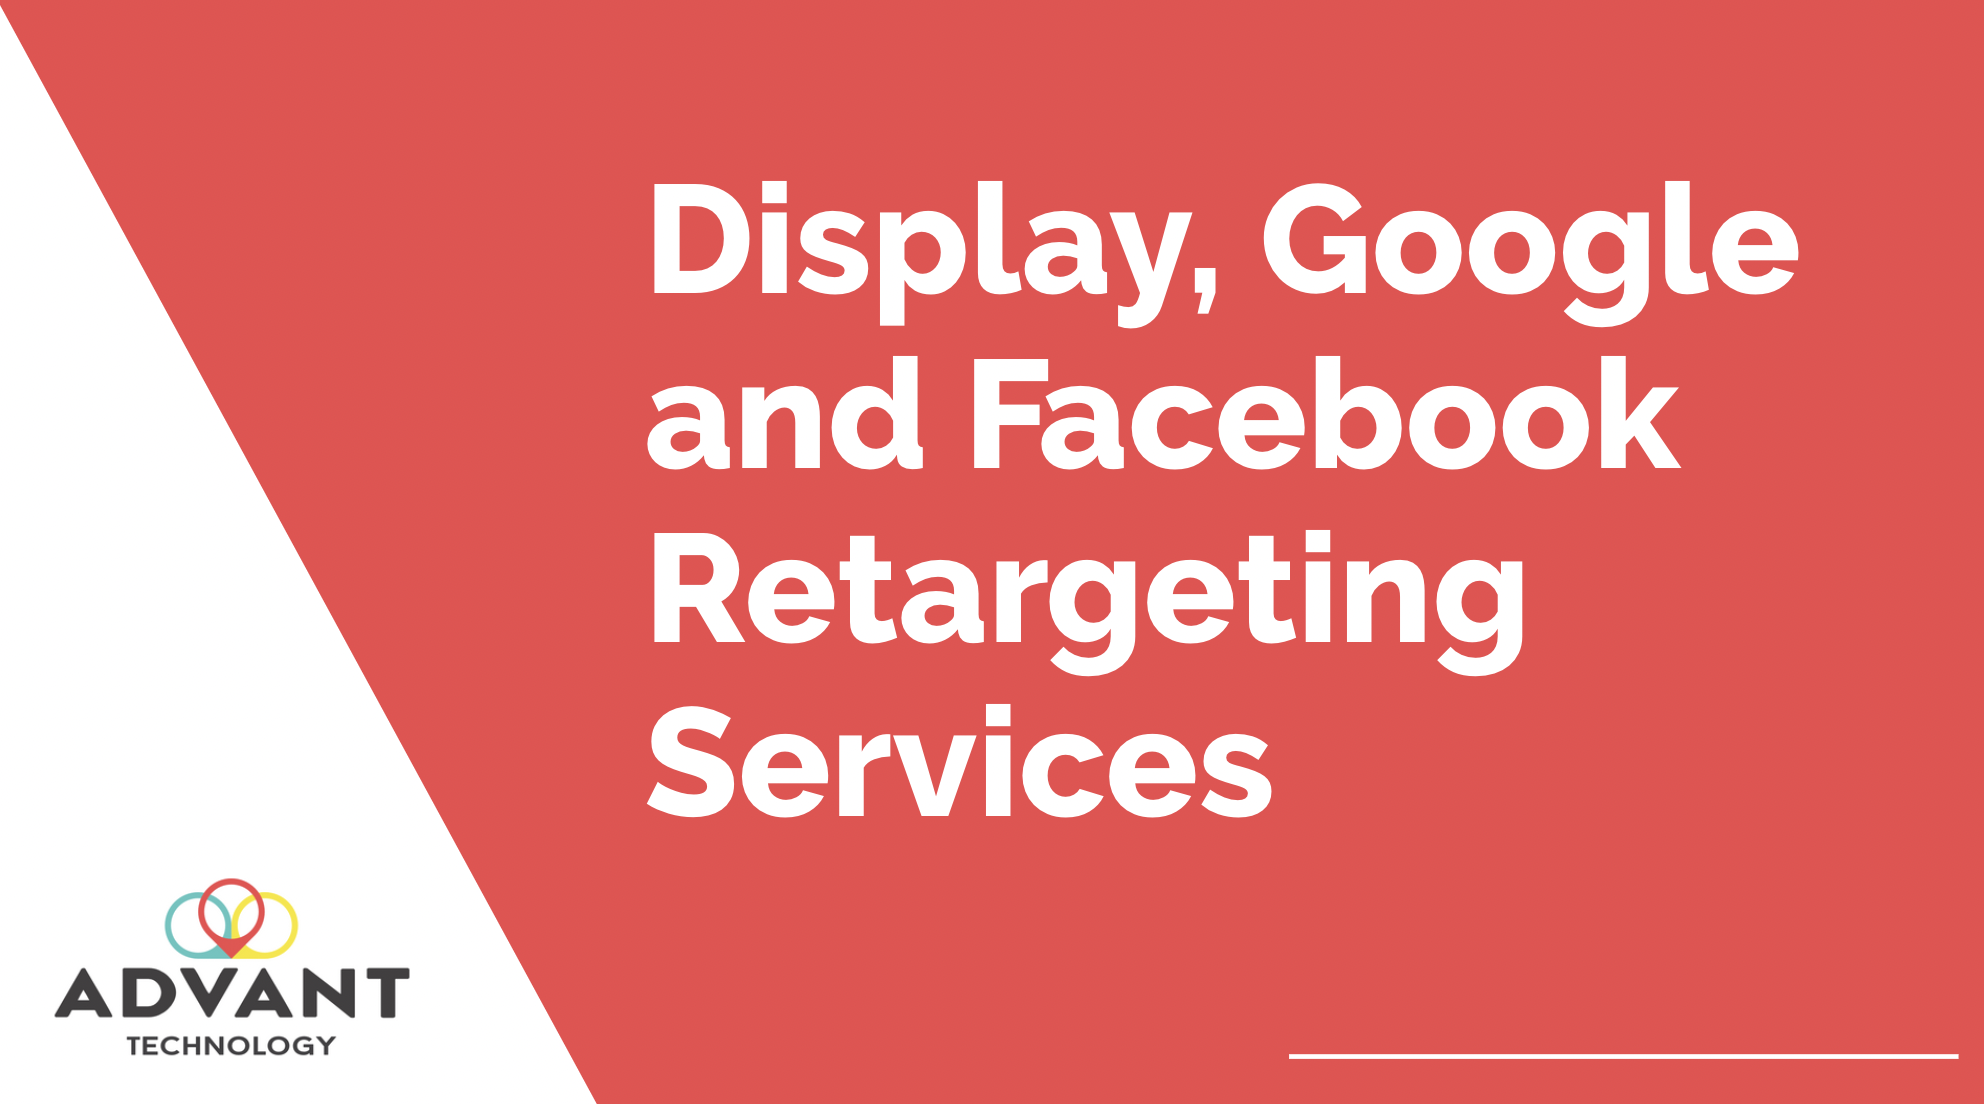 Display, Google and Facebook Retargeting Services